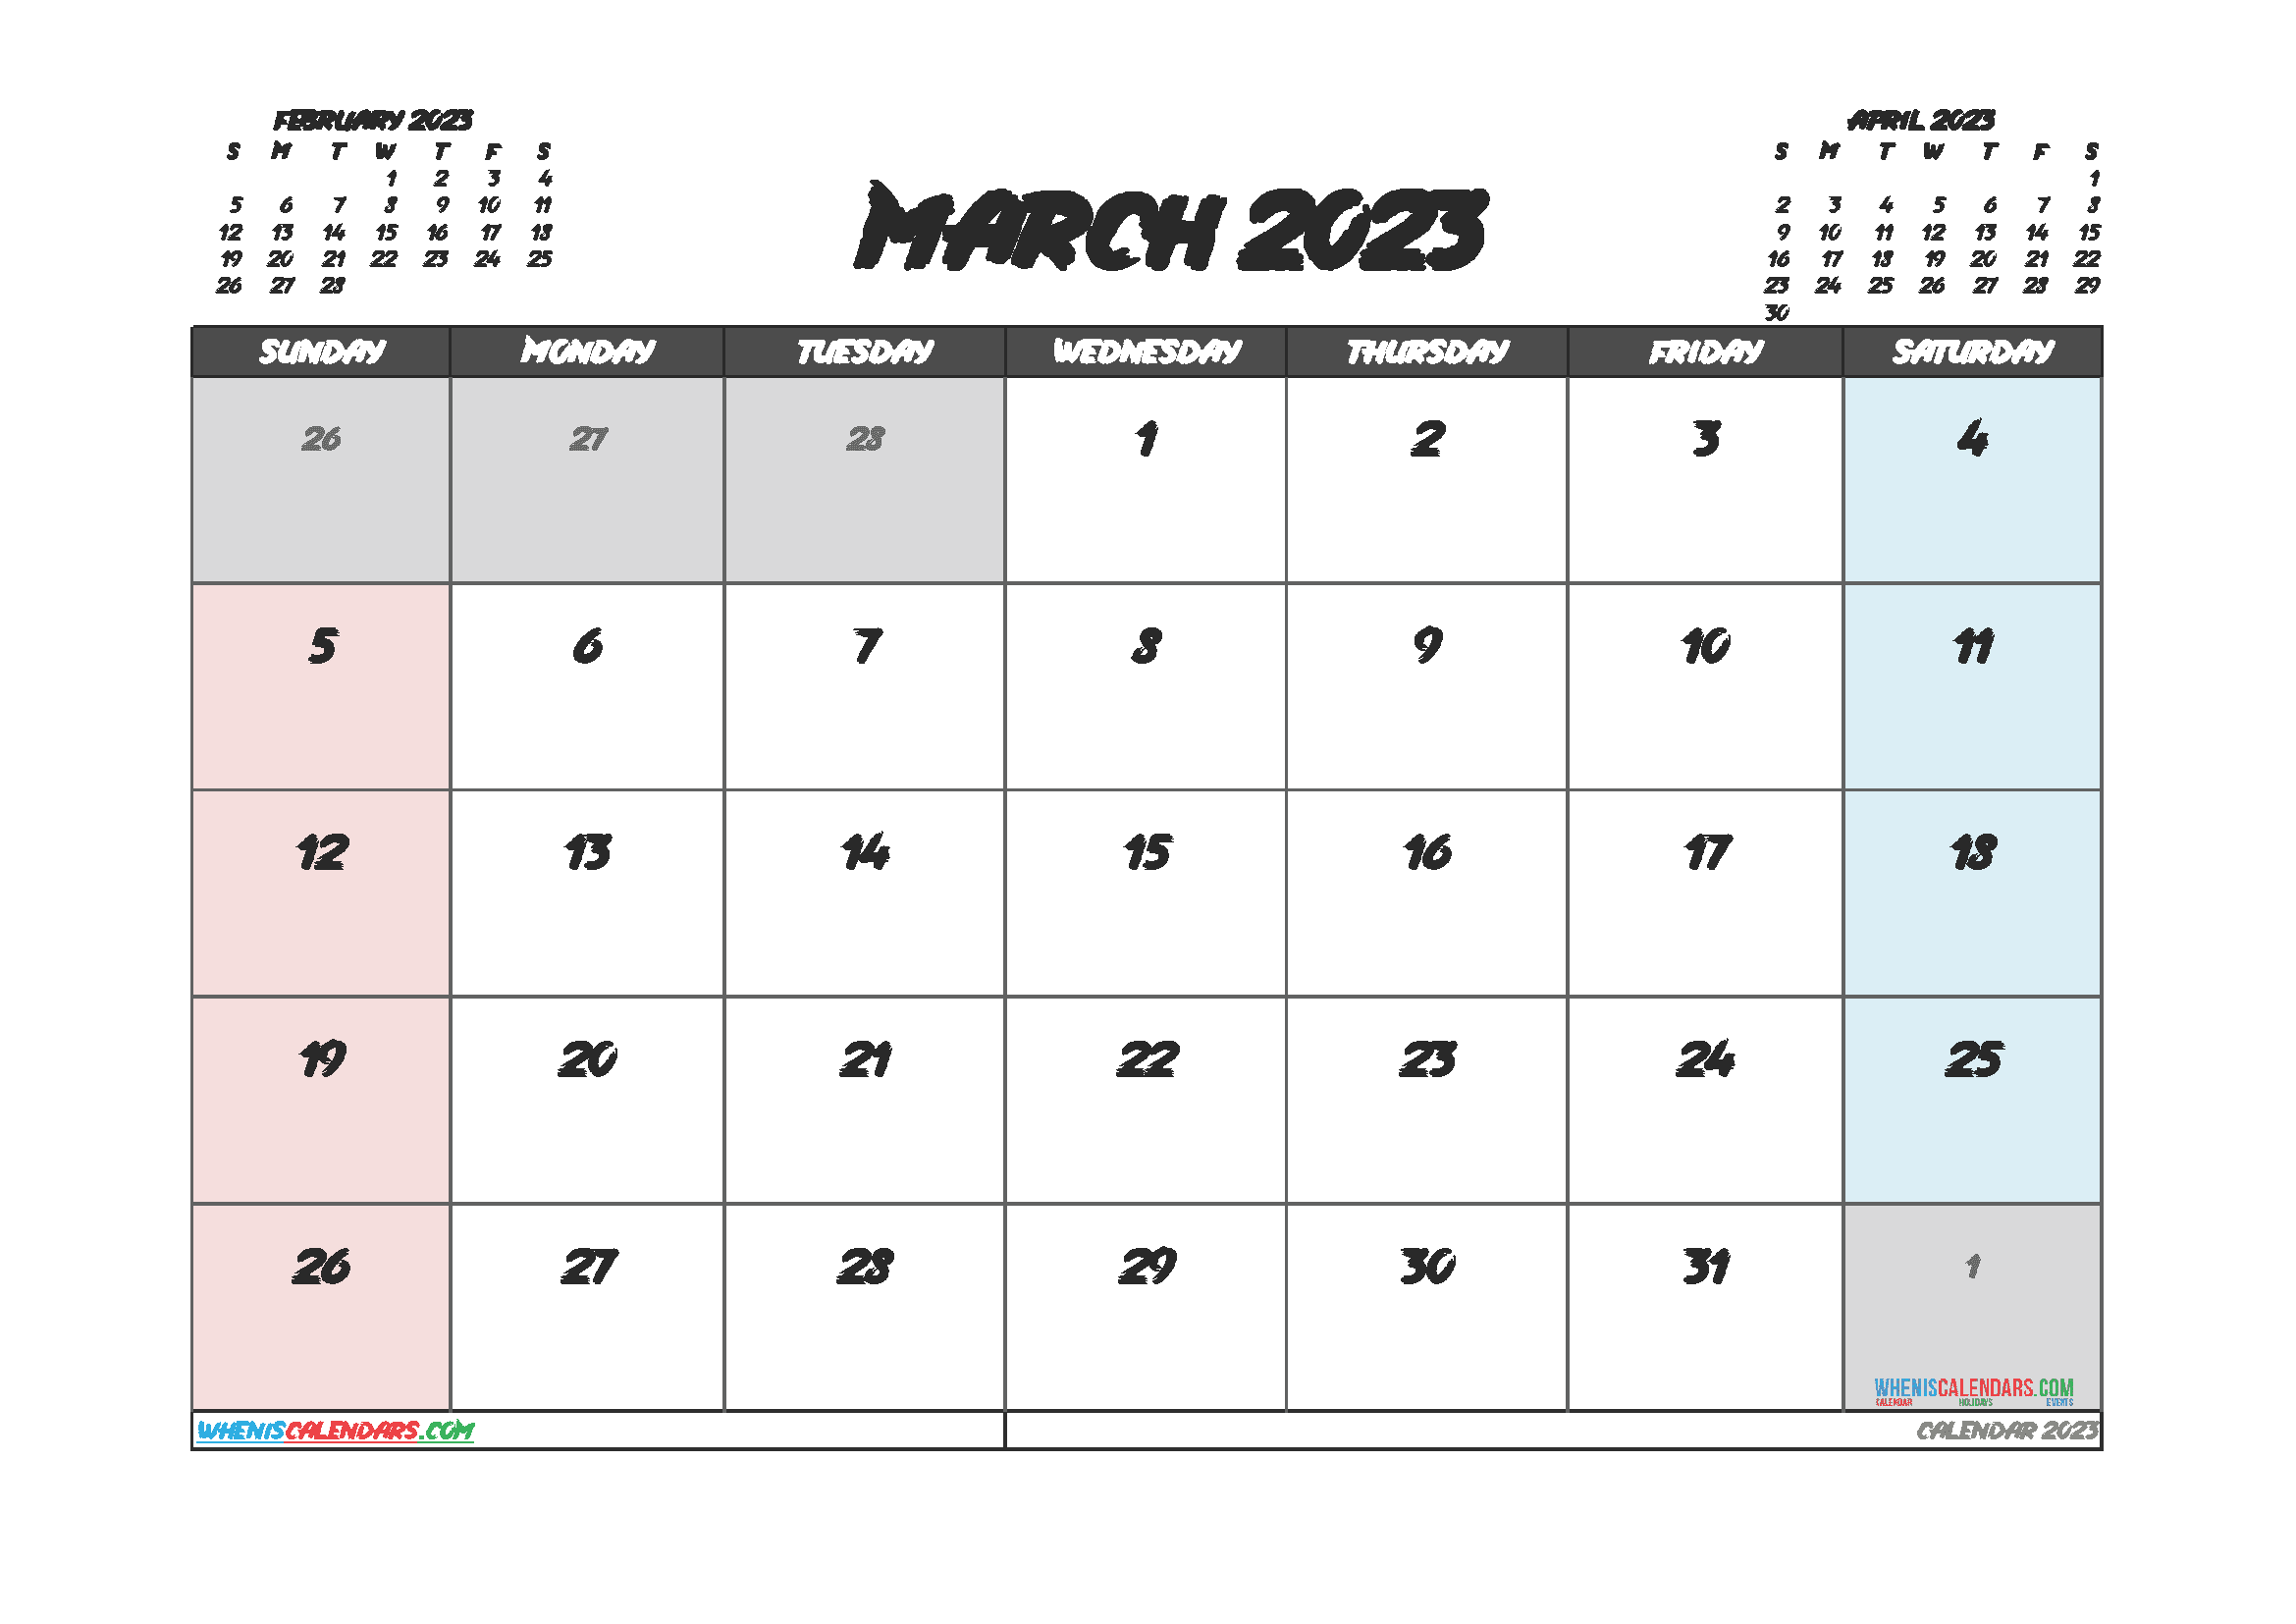 Free 2023 Calendar March Printable